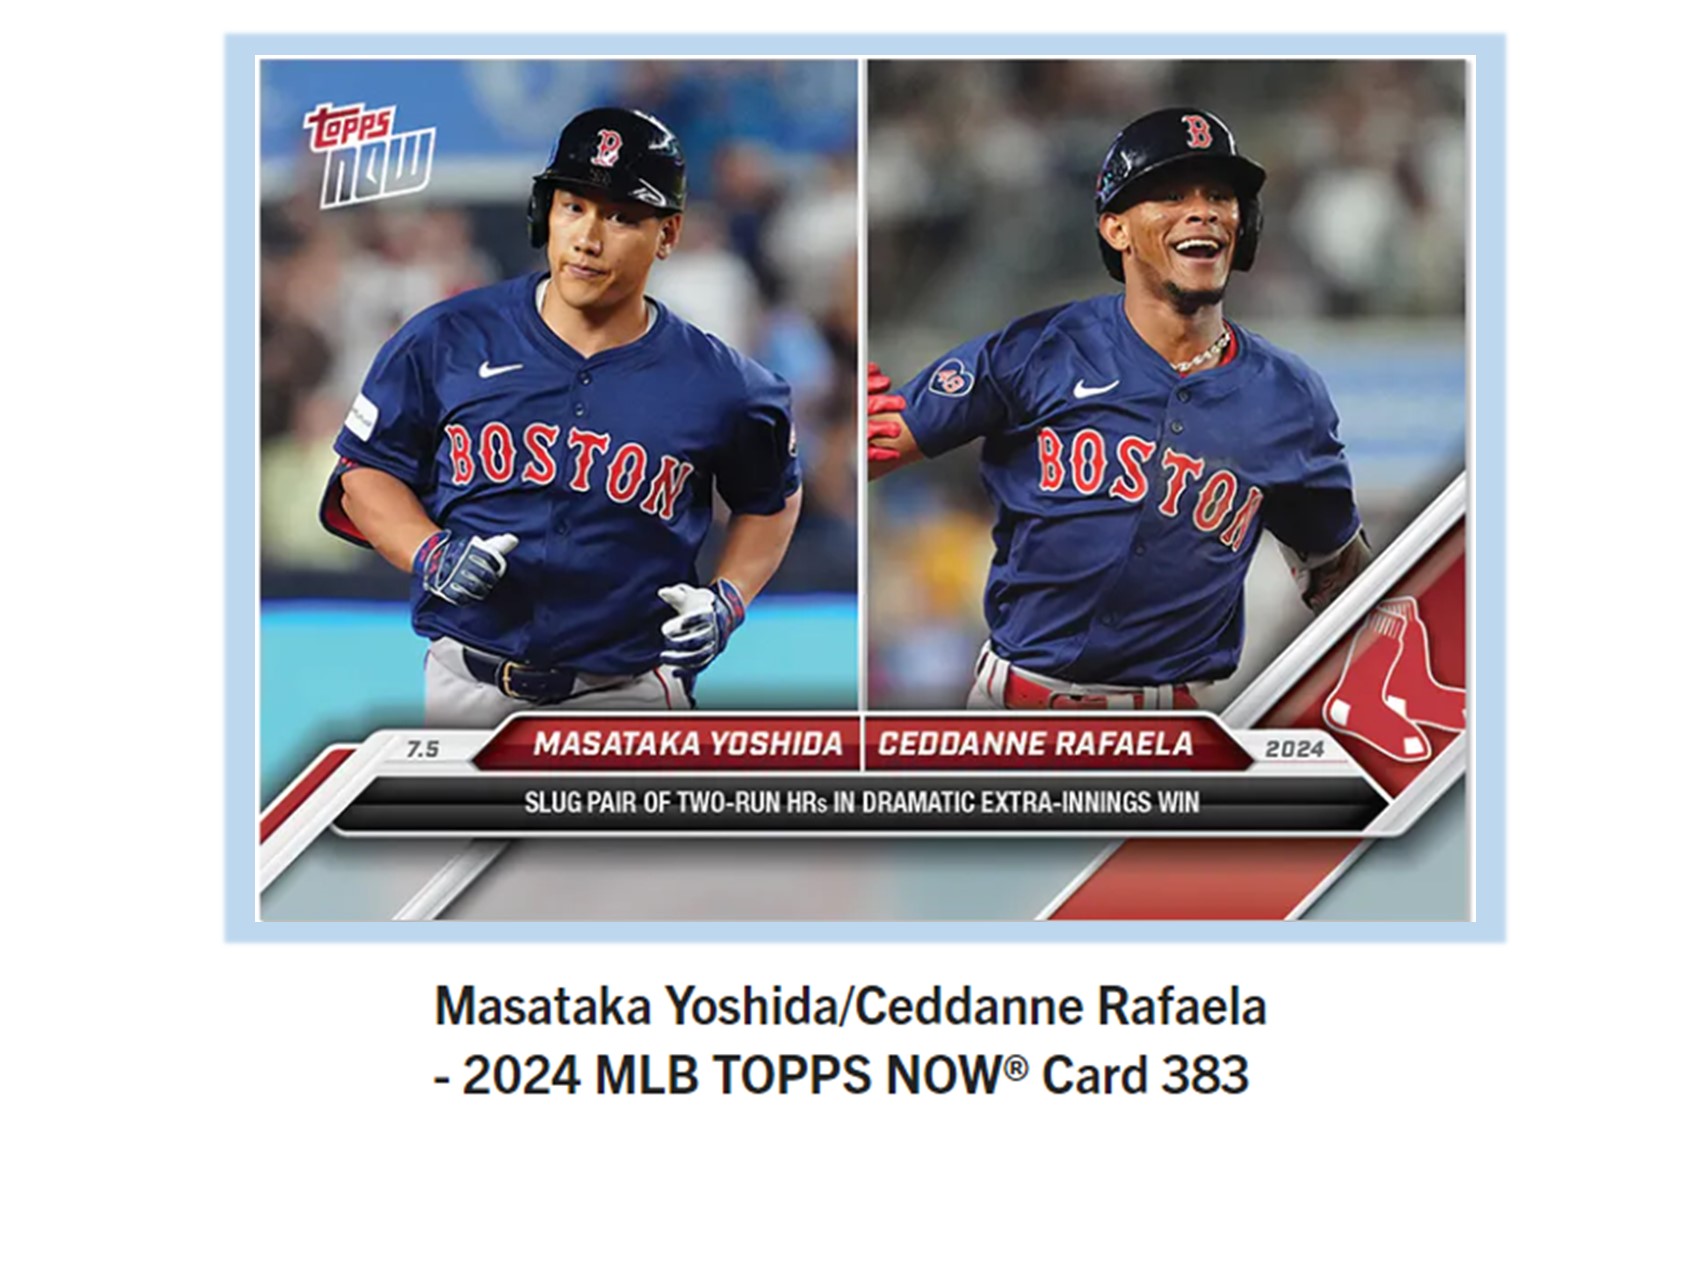 Topps株式会社が　Topps NOW新商品「Masataka Yoshida/Ceddanne Rafaela - 2024 MLB TOPPS NOW(R) Card 383等 」発売開始を発表